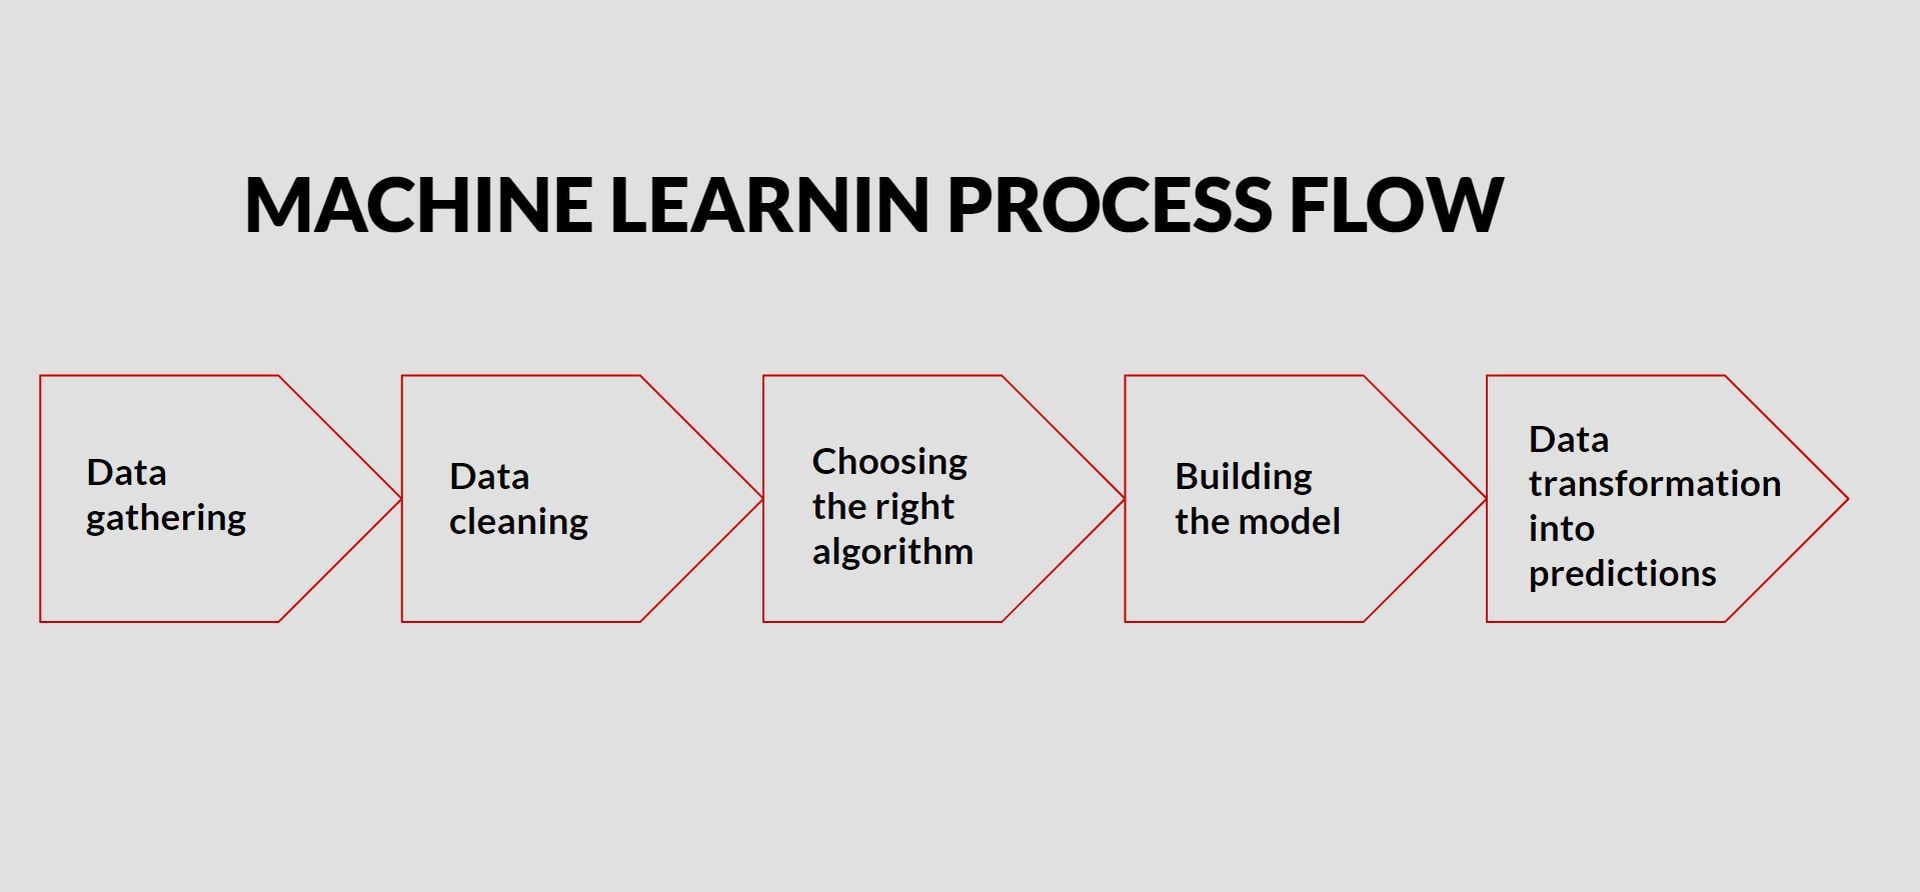 Understanding a machine learning process flow